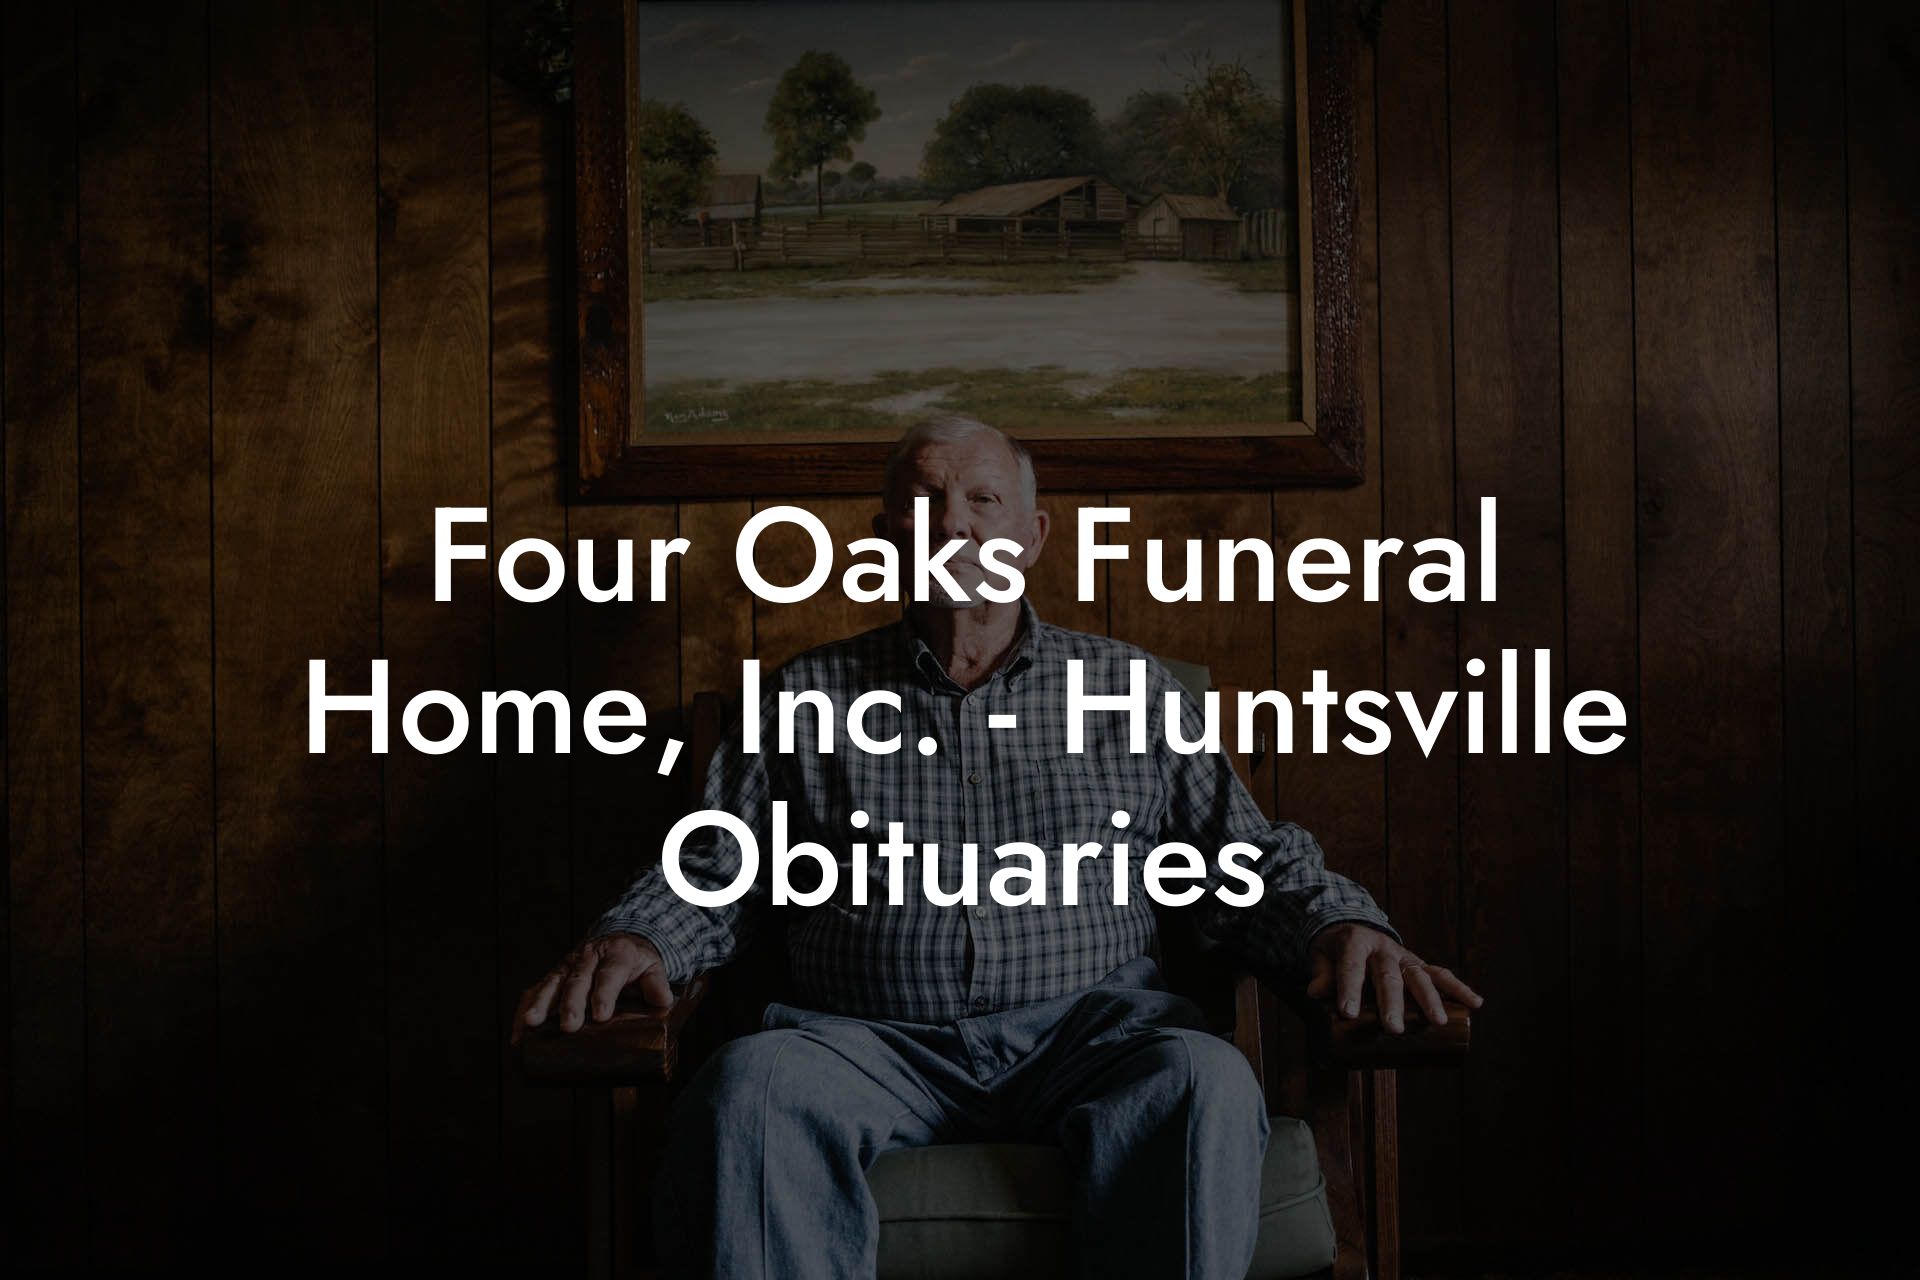 Four Oaks Funeral Home, Inc. - Huntsville Obituaries